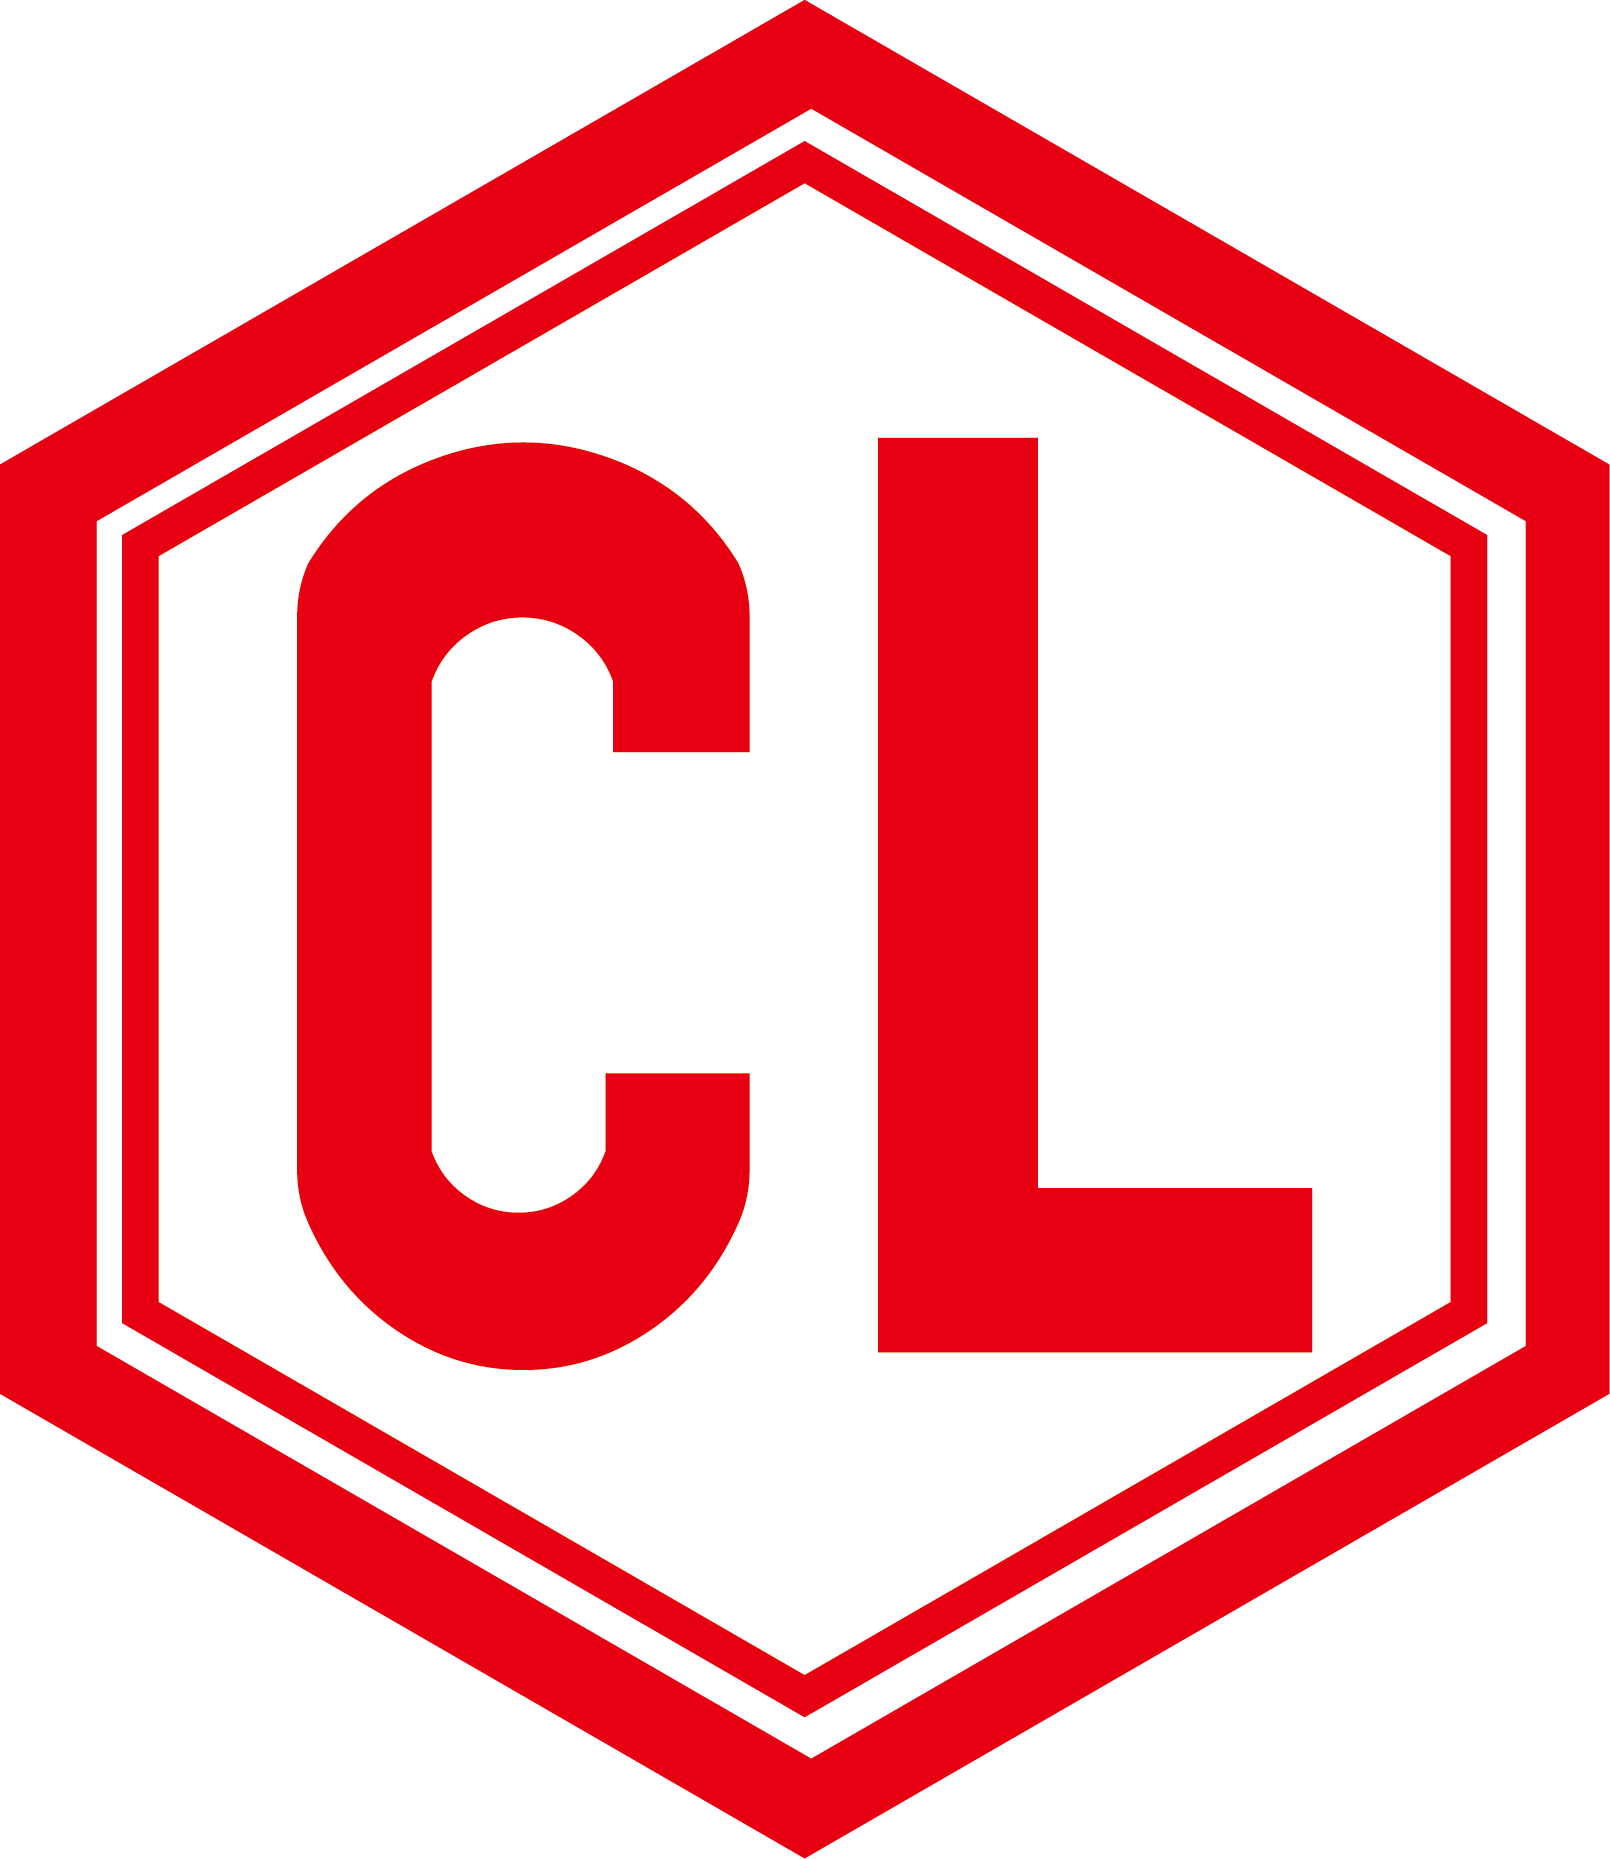 CHIH LIEN logo